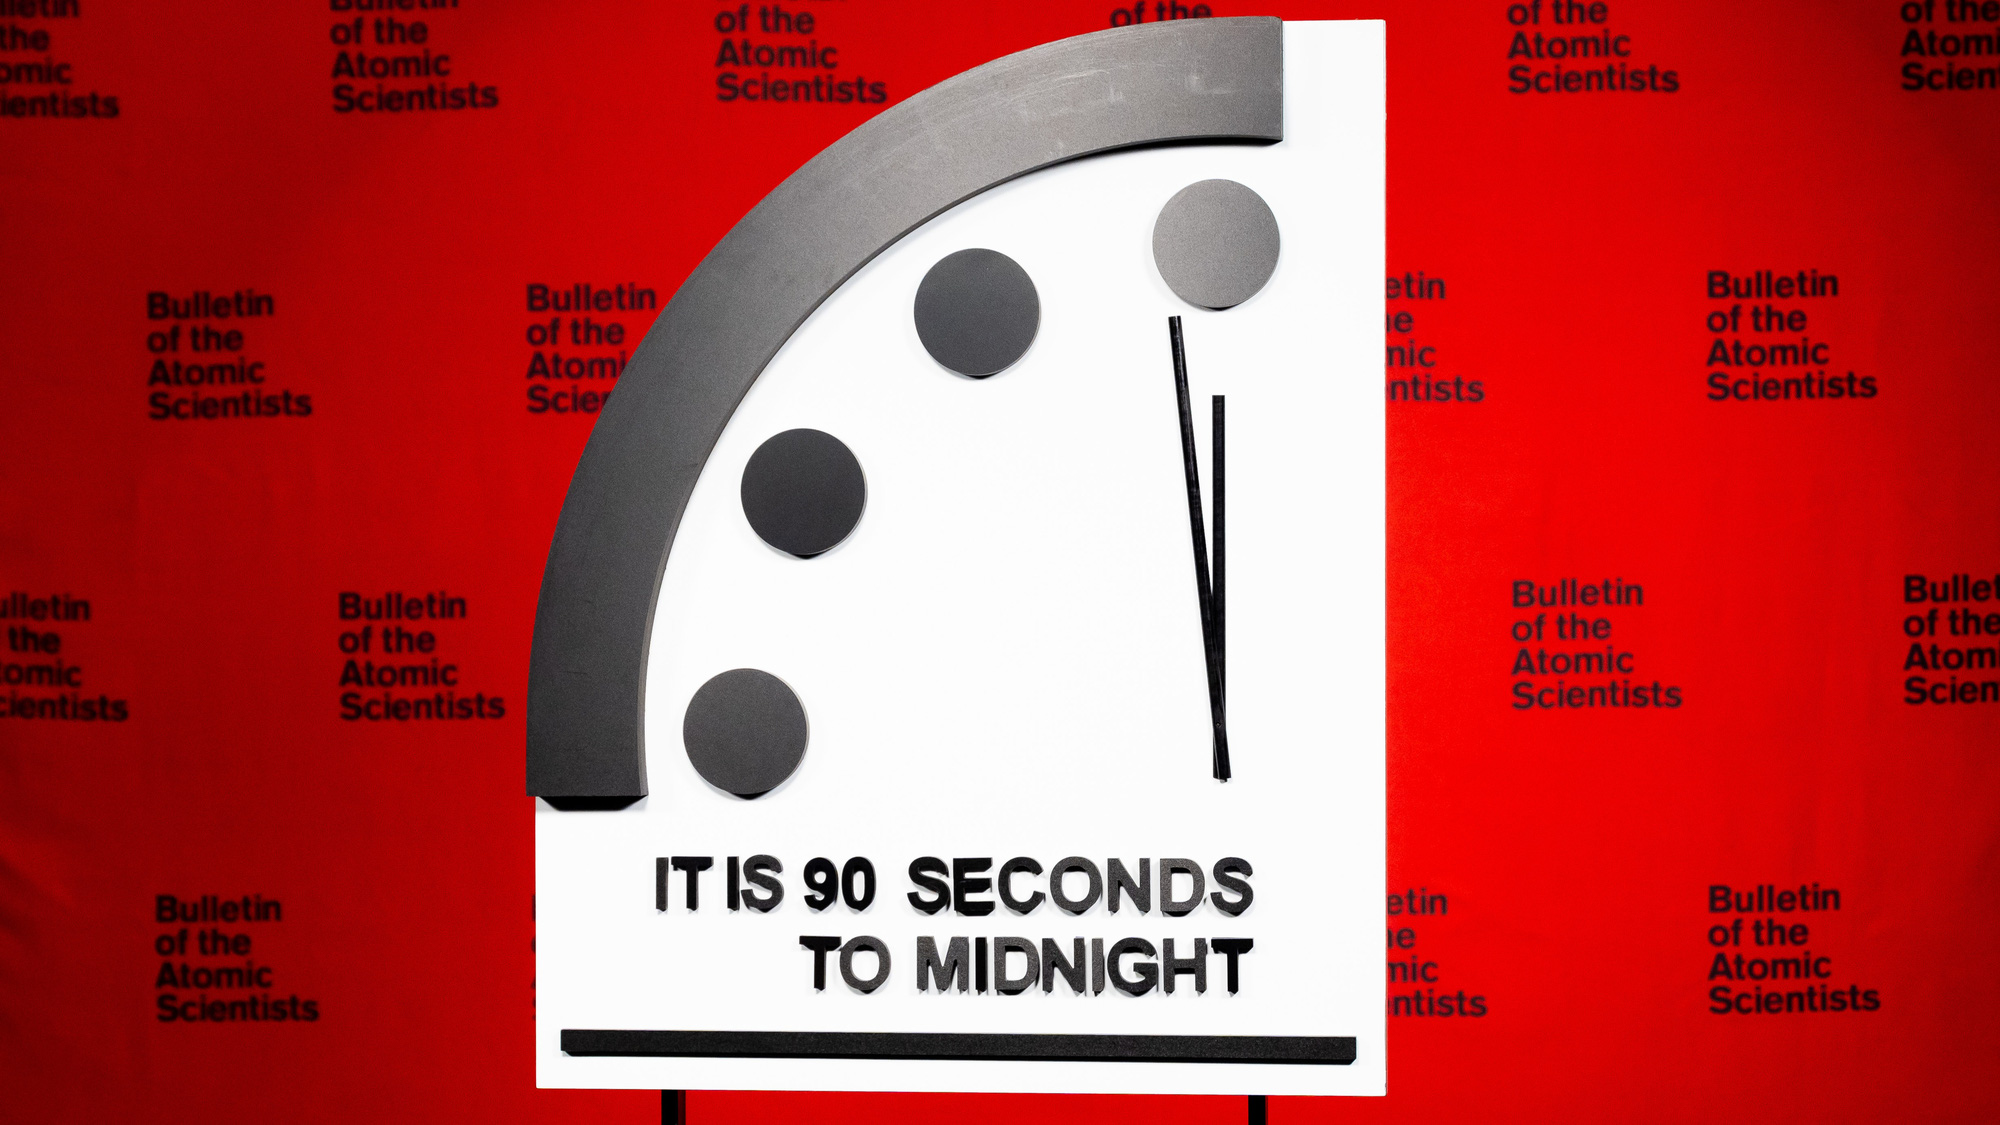 Doomsday clock: Only 90 seconds left, unprecedented danger warning - Photo 1.